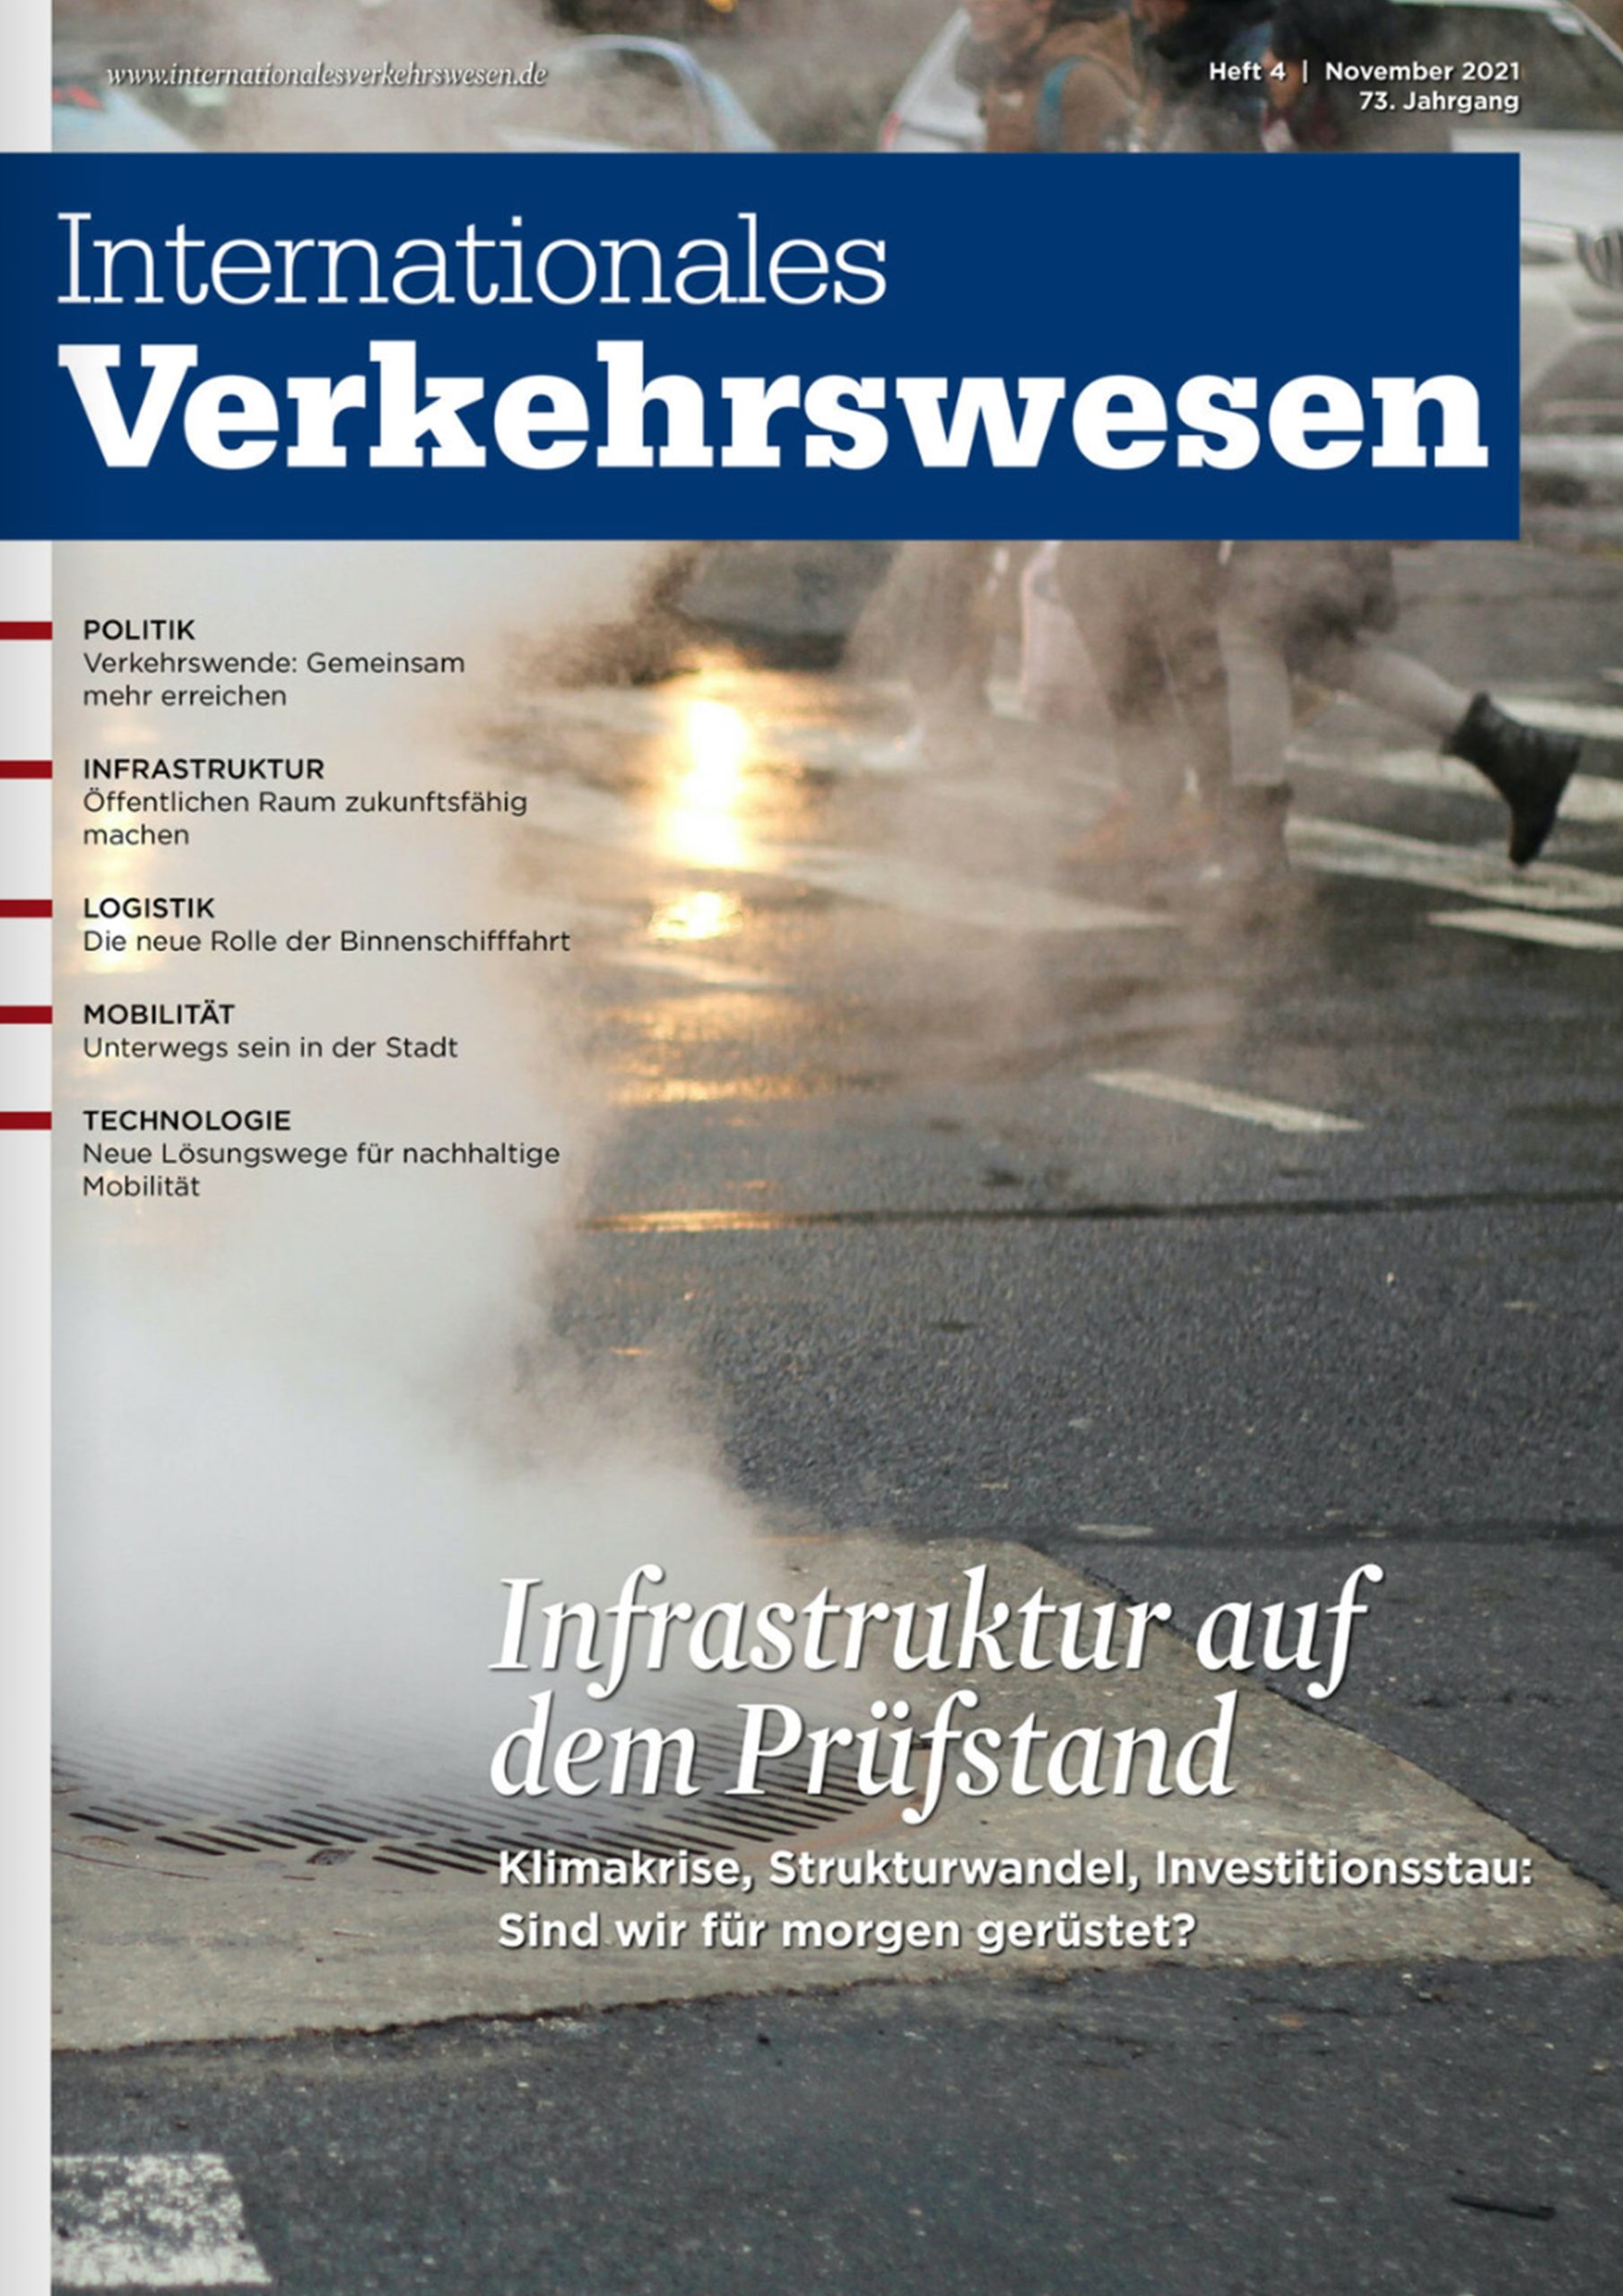 Titel Internationales Verkehrswesen 4|2021: Trialog Publishers Verlagsgesellschaft
